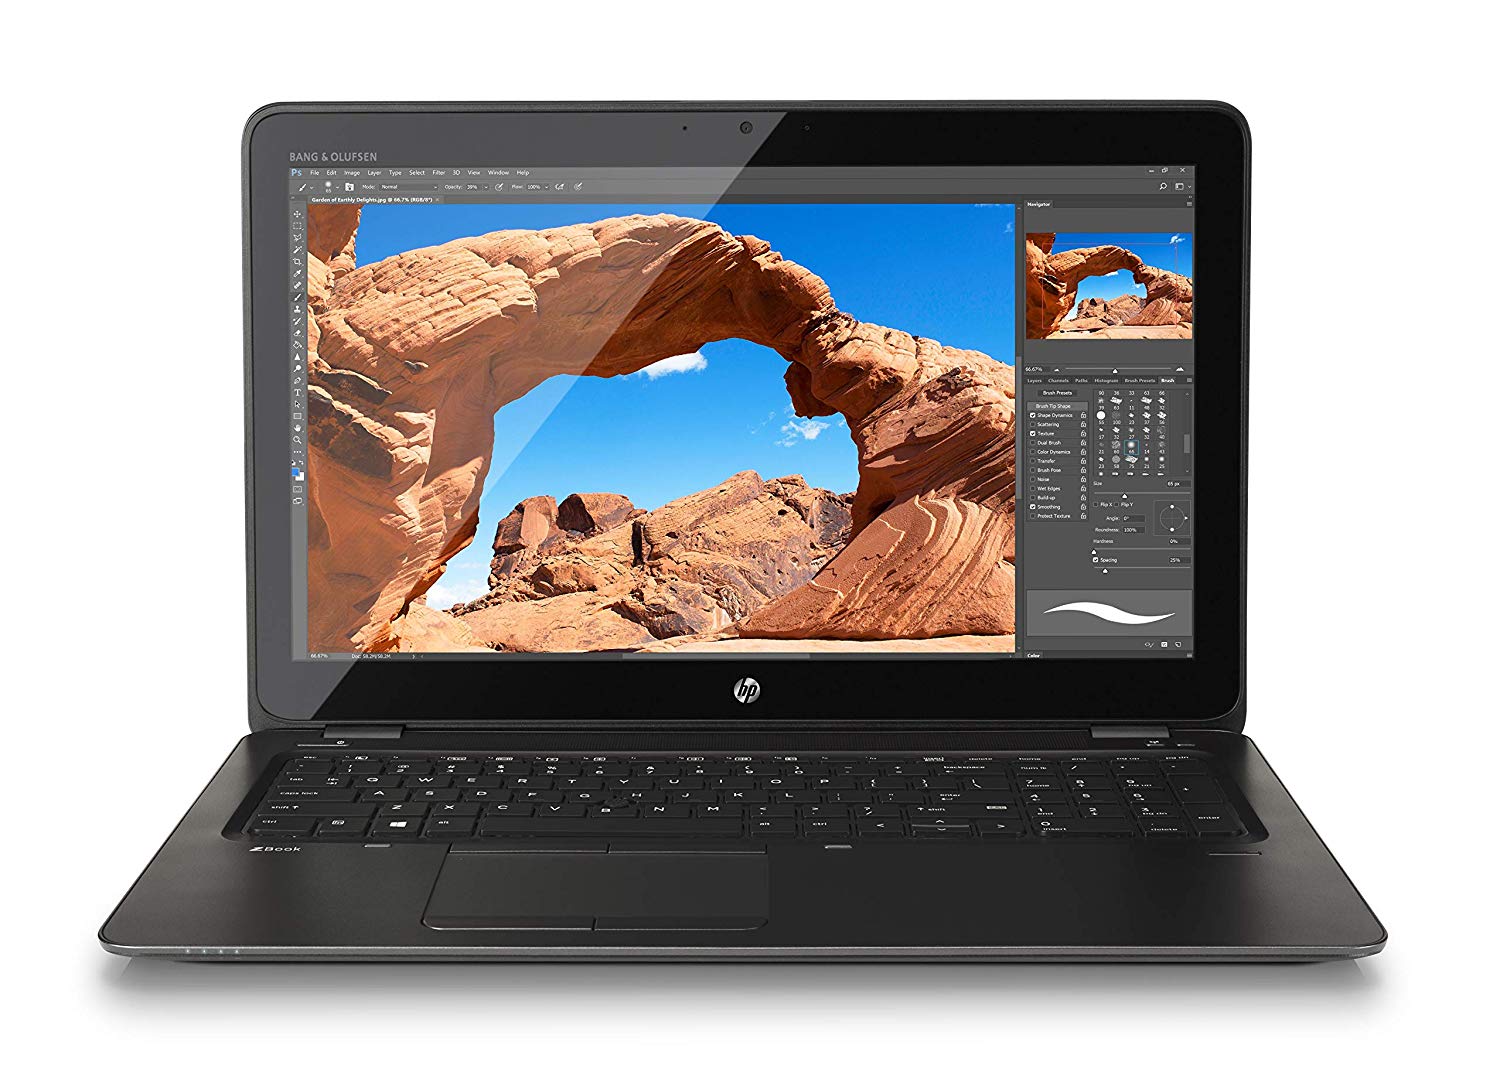 HP ZBook Energy Star 15U G4 Windows 10 Pro, Finger Print Reader, 7th Gen Intel Core i5-7200U, 1TB SATA, 16GB RAM, 15.6-inch (Black, 4LV95PA) Price in India